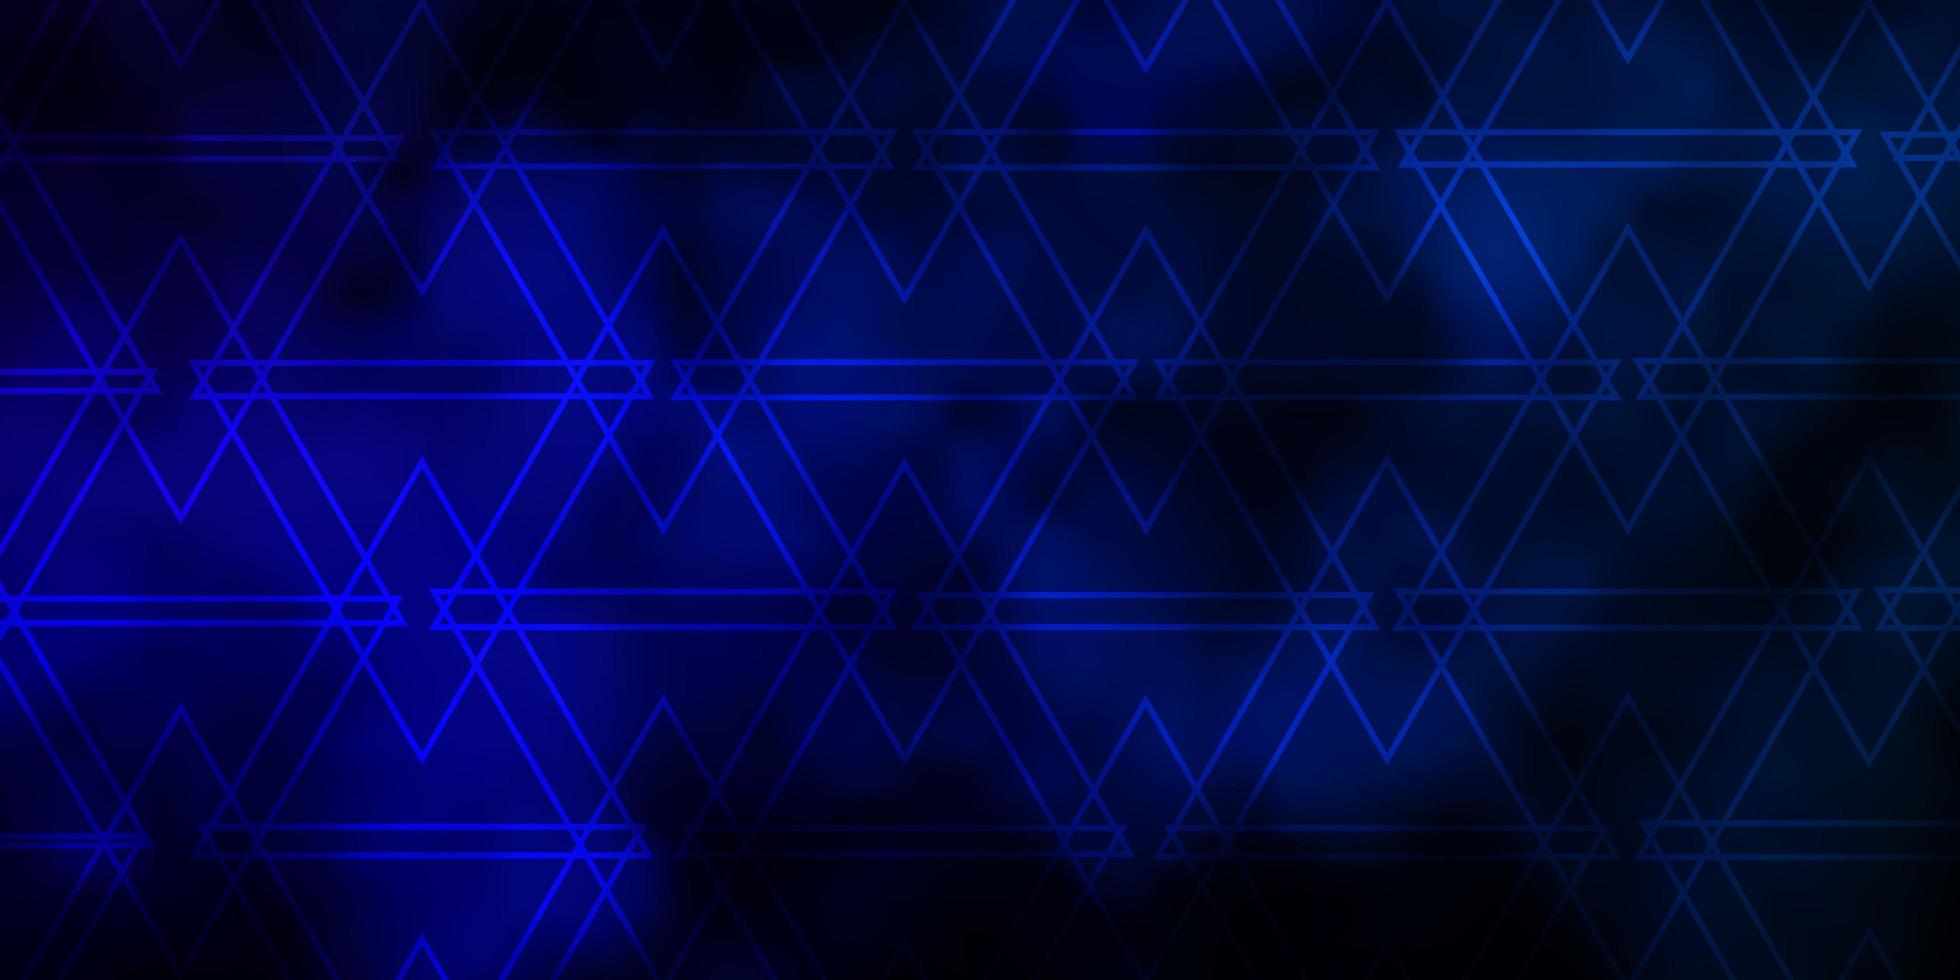 modelo de vetor azul escuro com triângulos de cristais